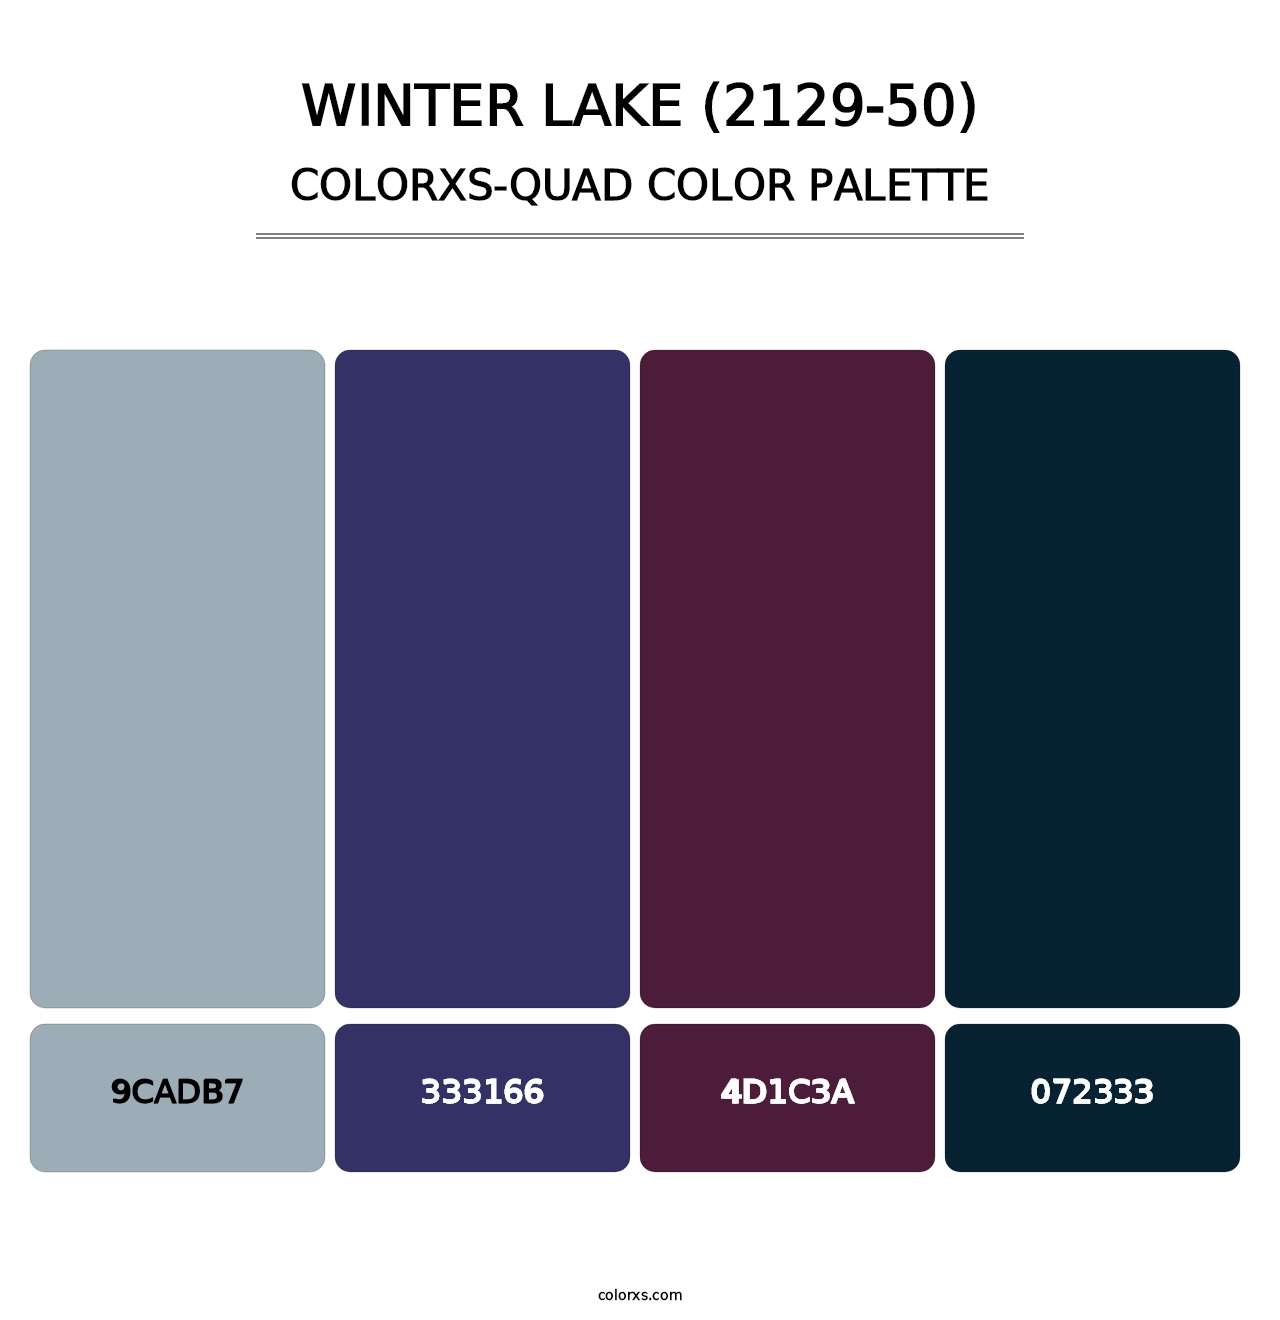 Winter Lake (2129-50) - Colorxs Quad Palette